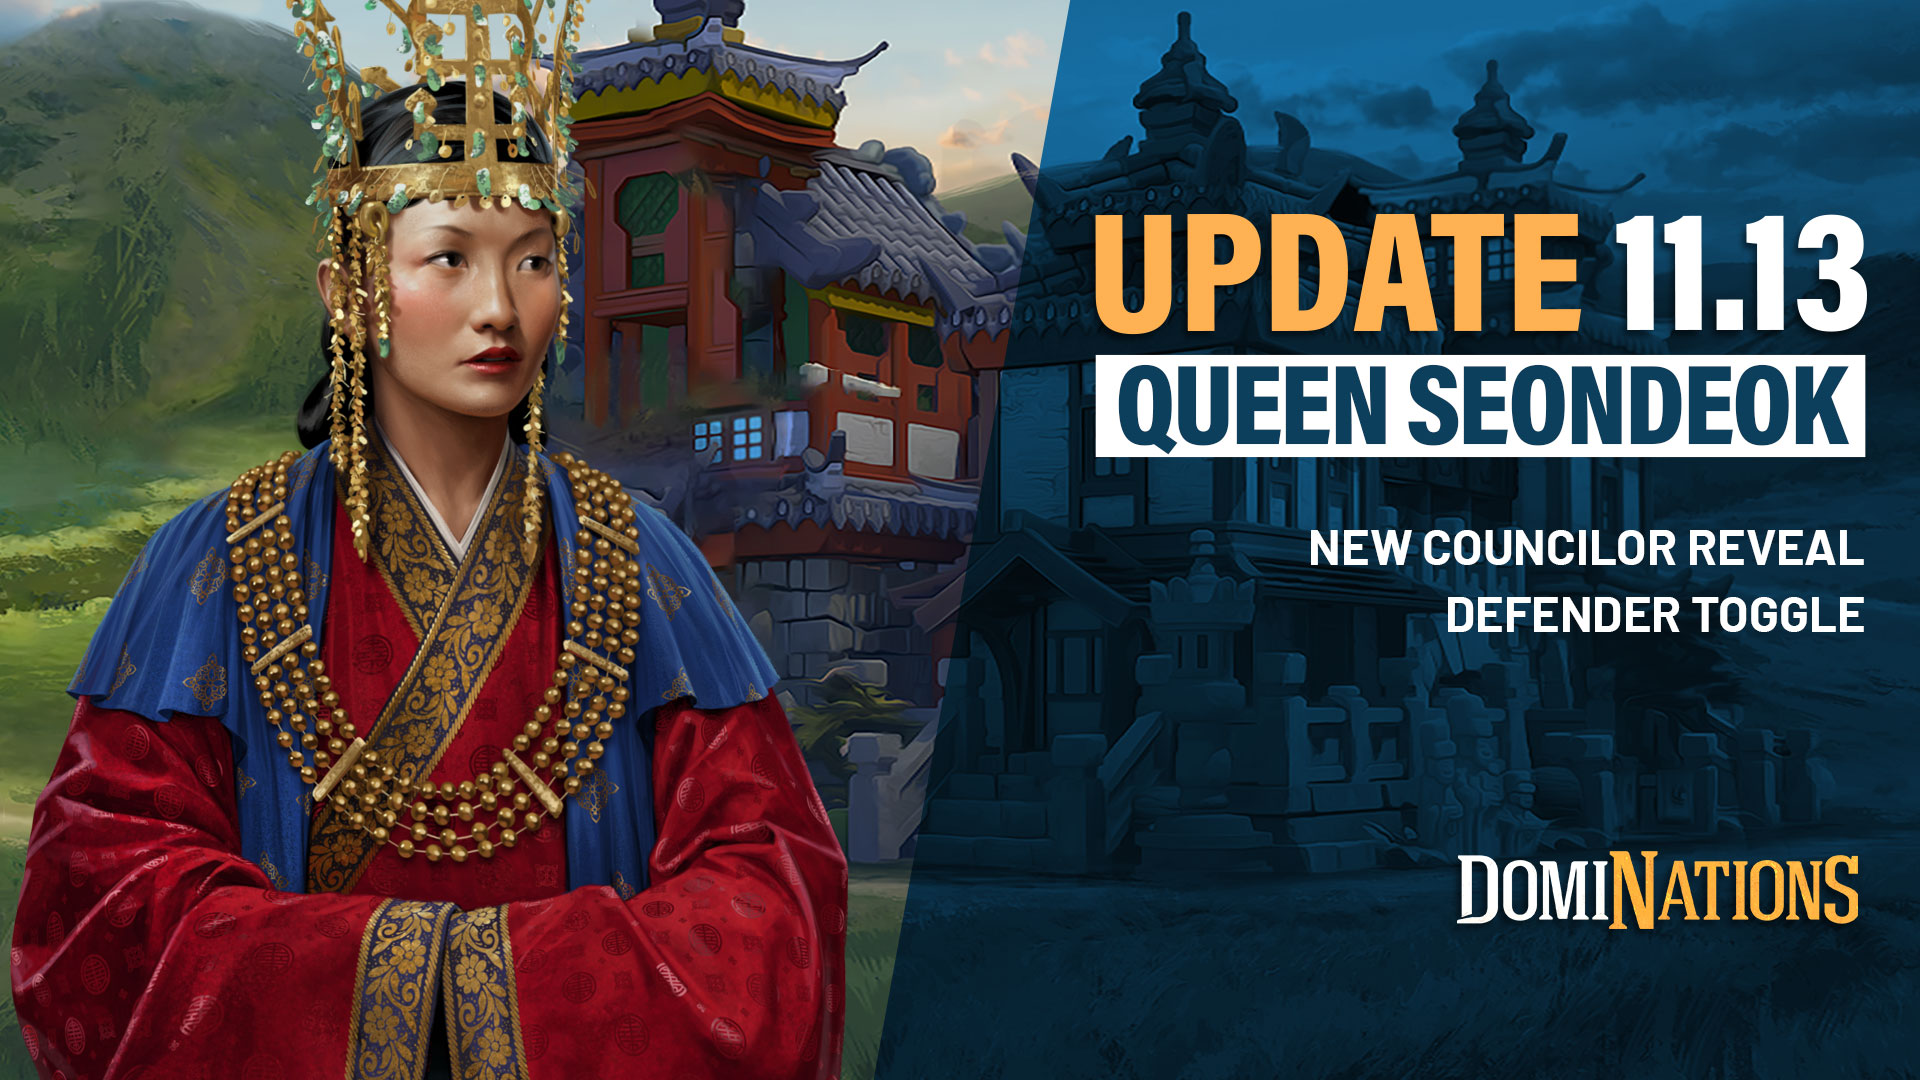 DomiNations Update 11.13 - Defenders and Queen Seondeok